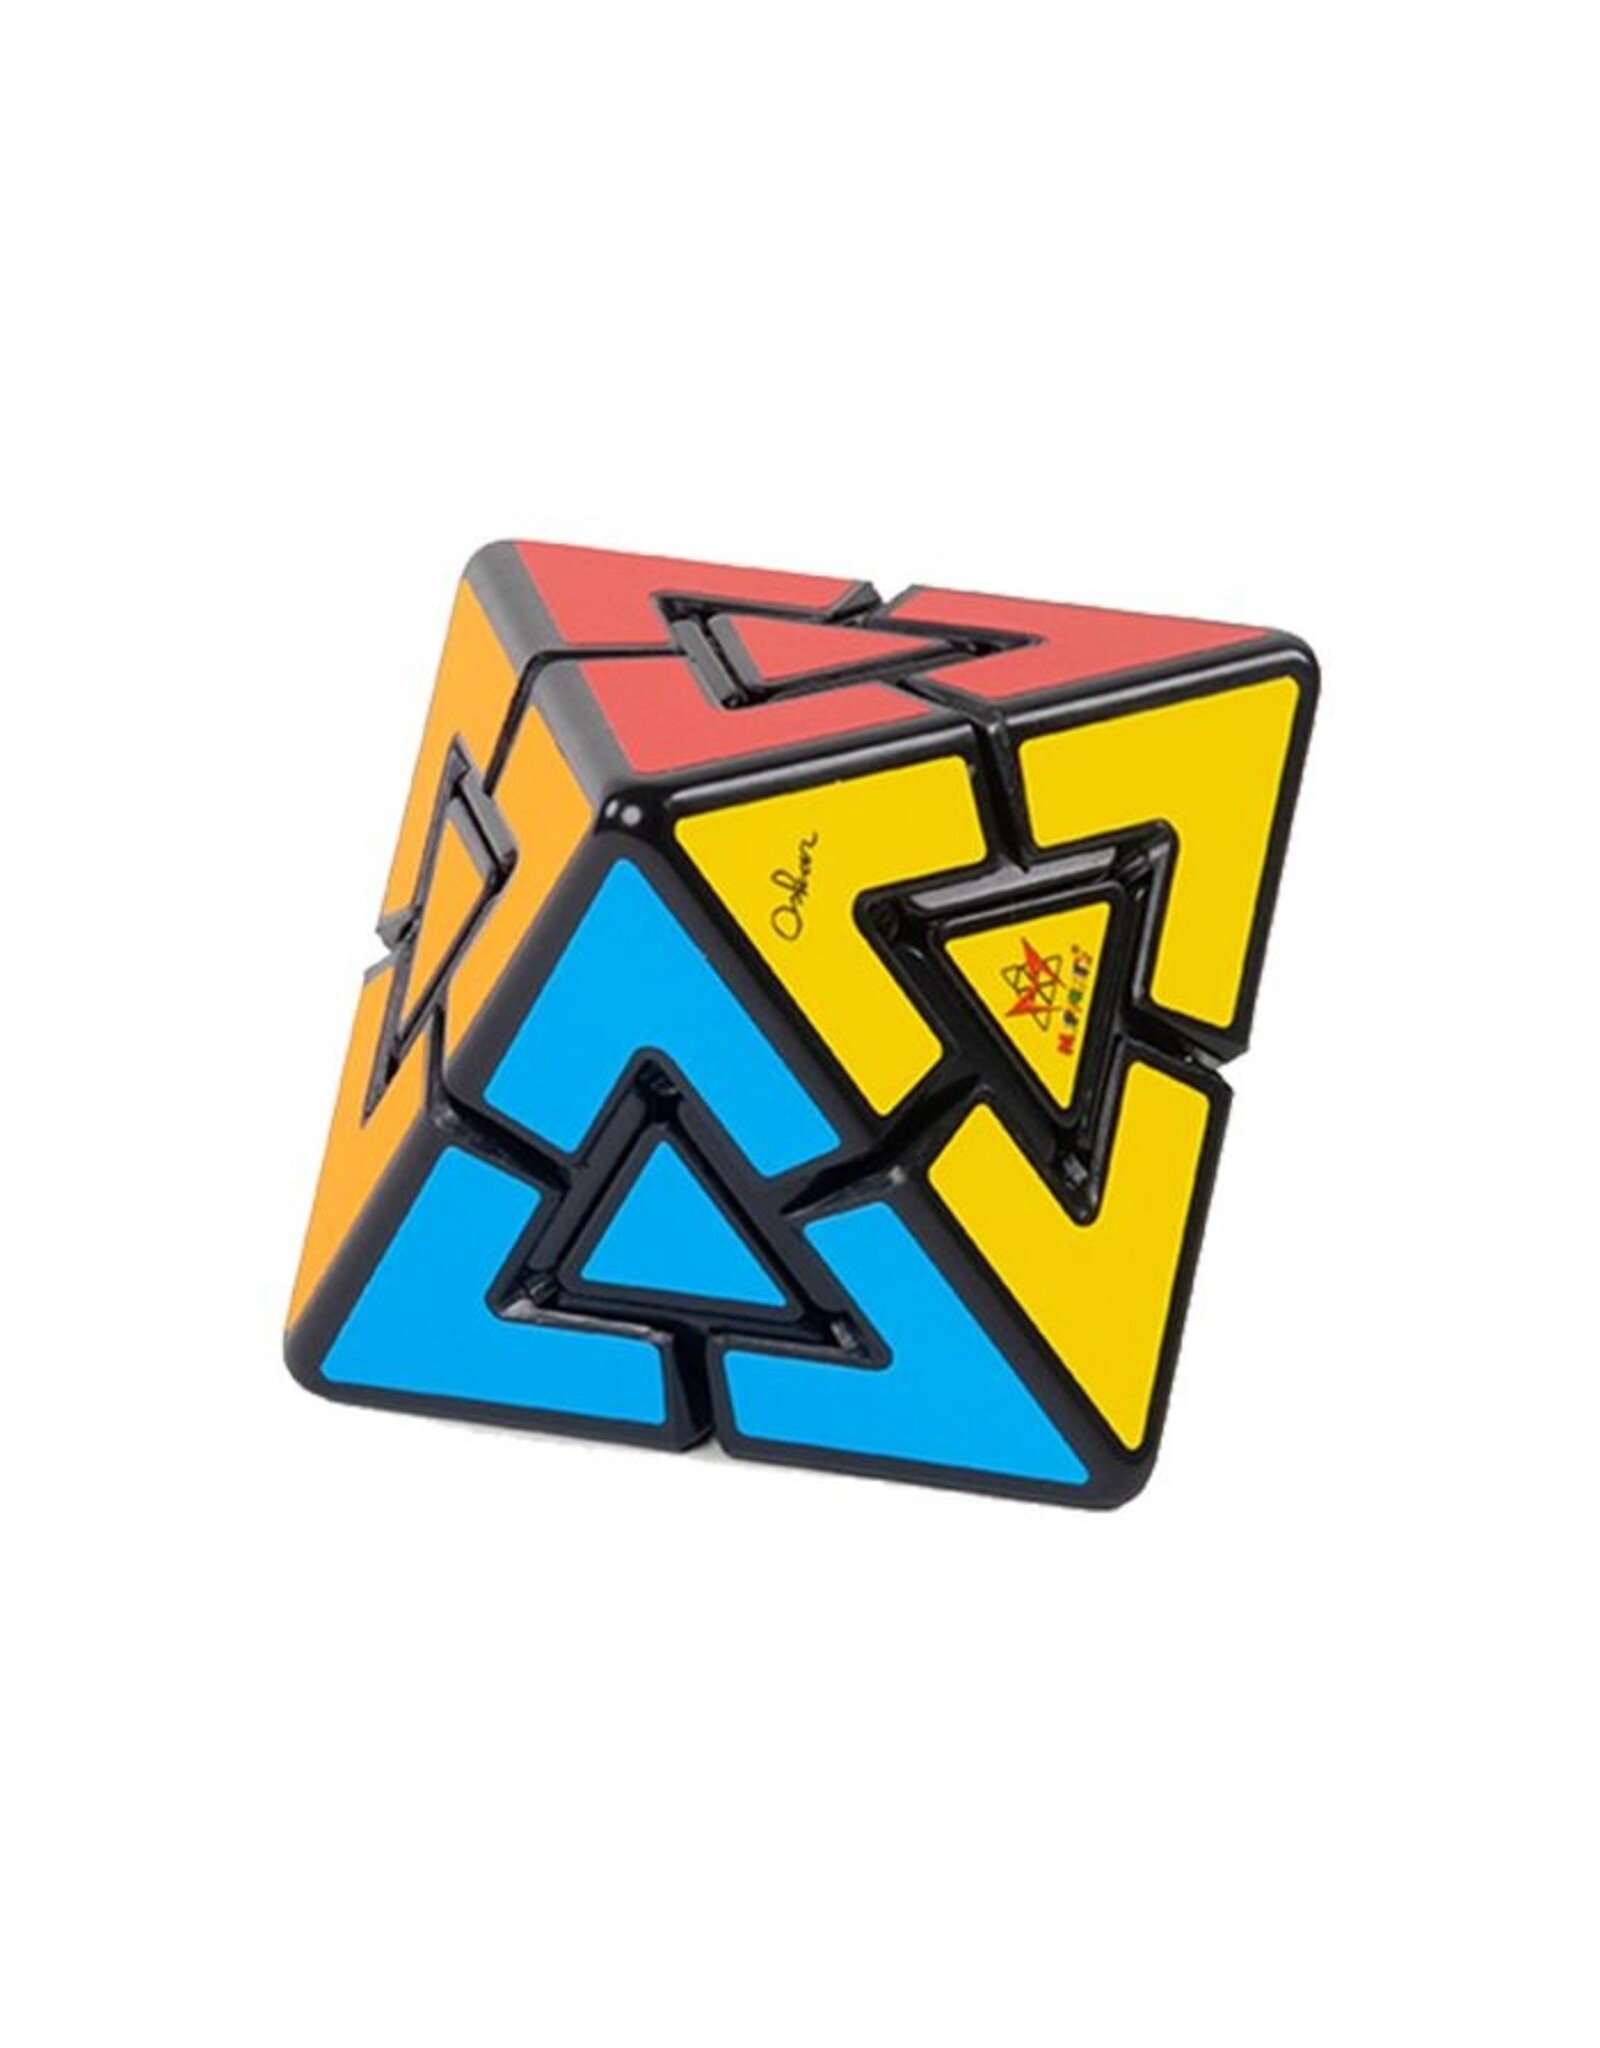 Meffert Meffert's Twisty Puzzle: Pyraminx Diamond